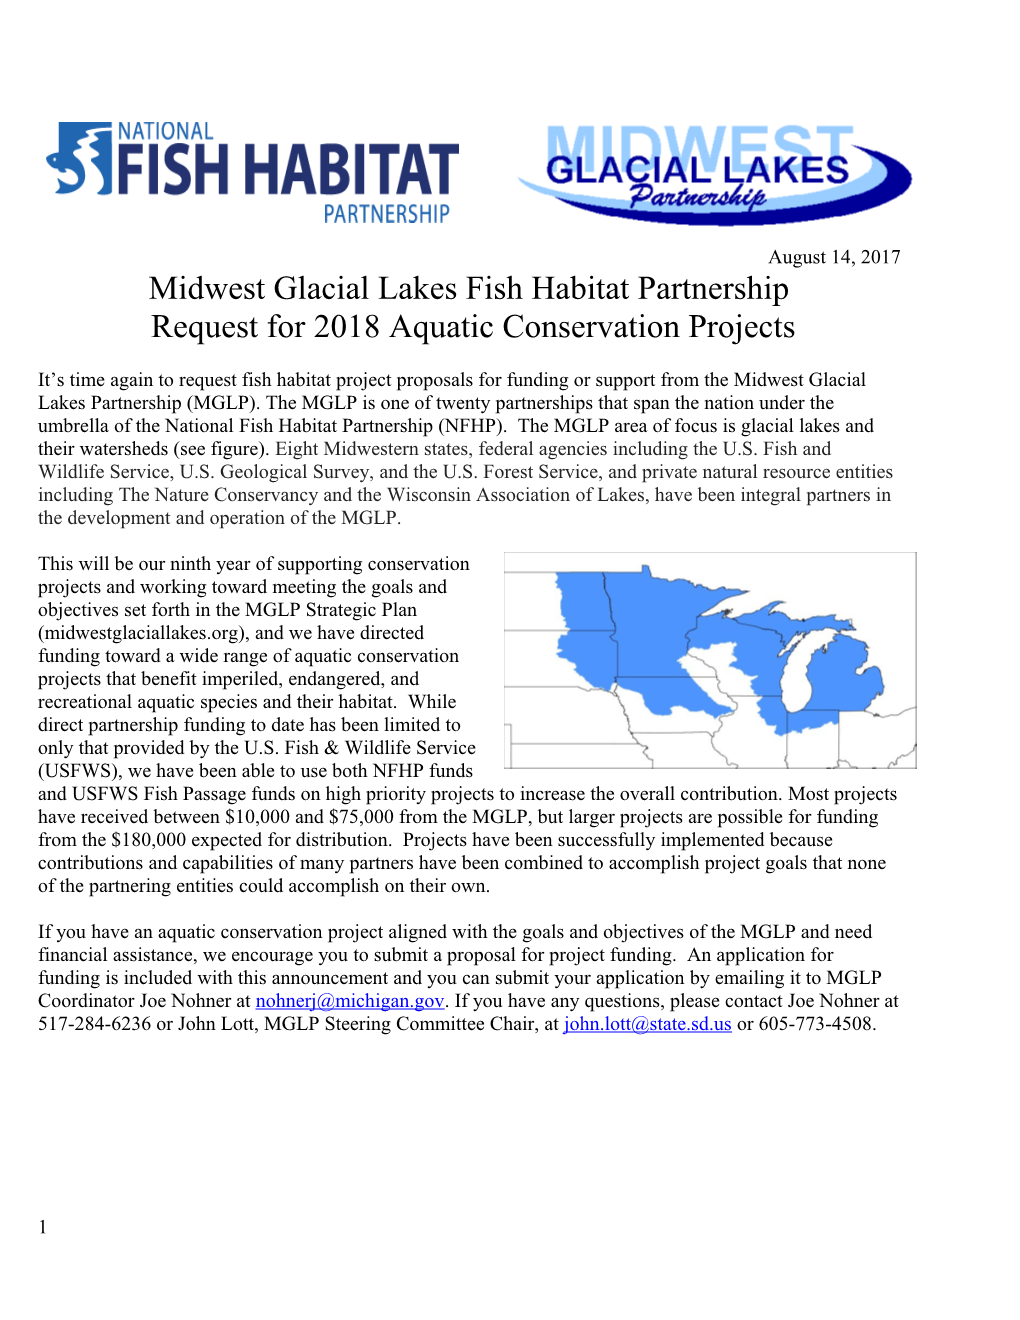 Midwest Glacial Lakes Fish Habitat Partnership